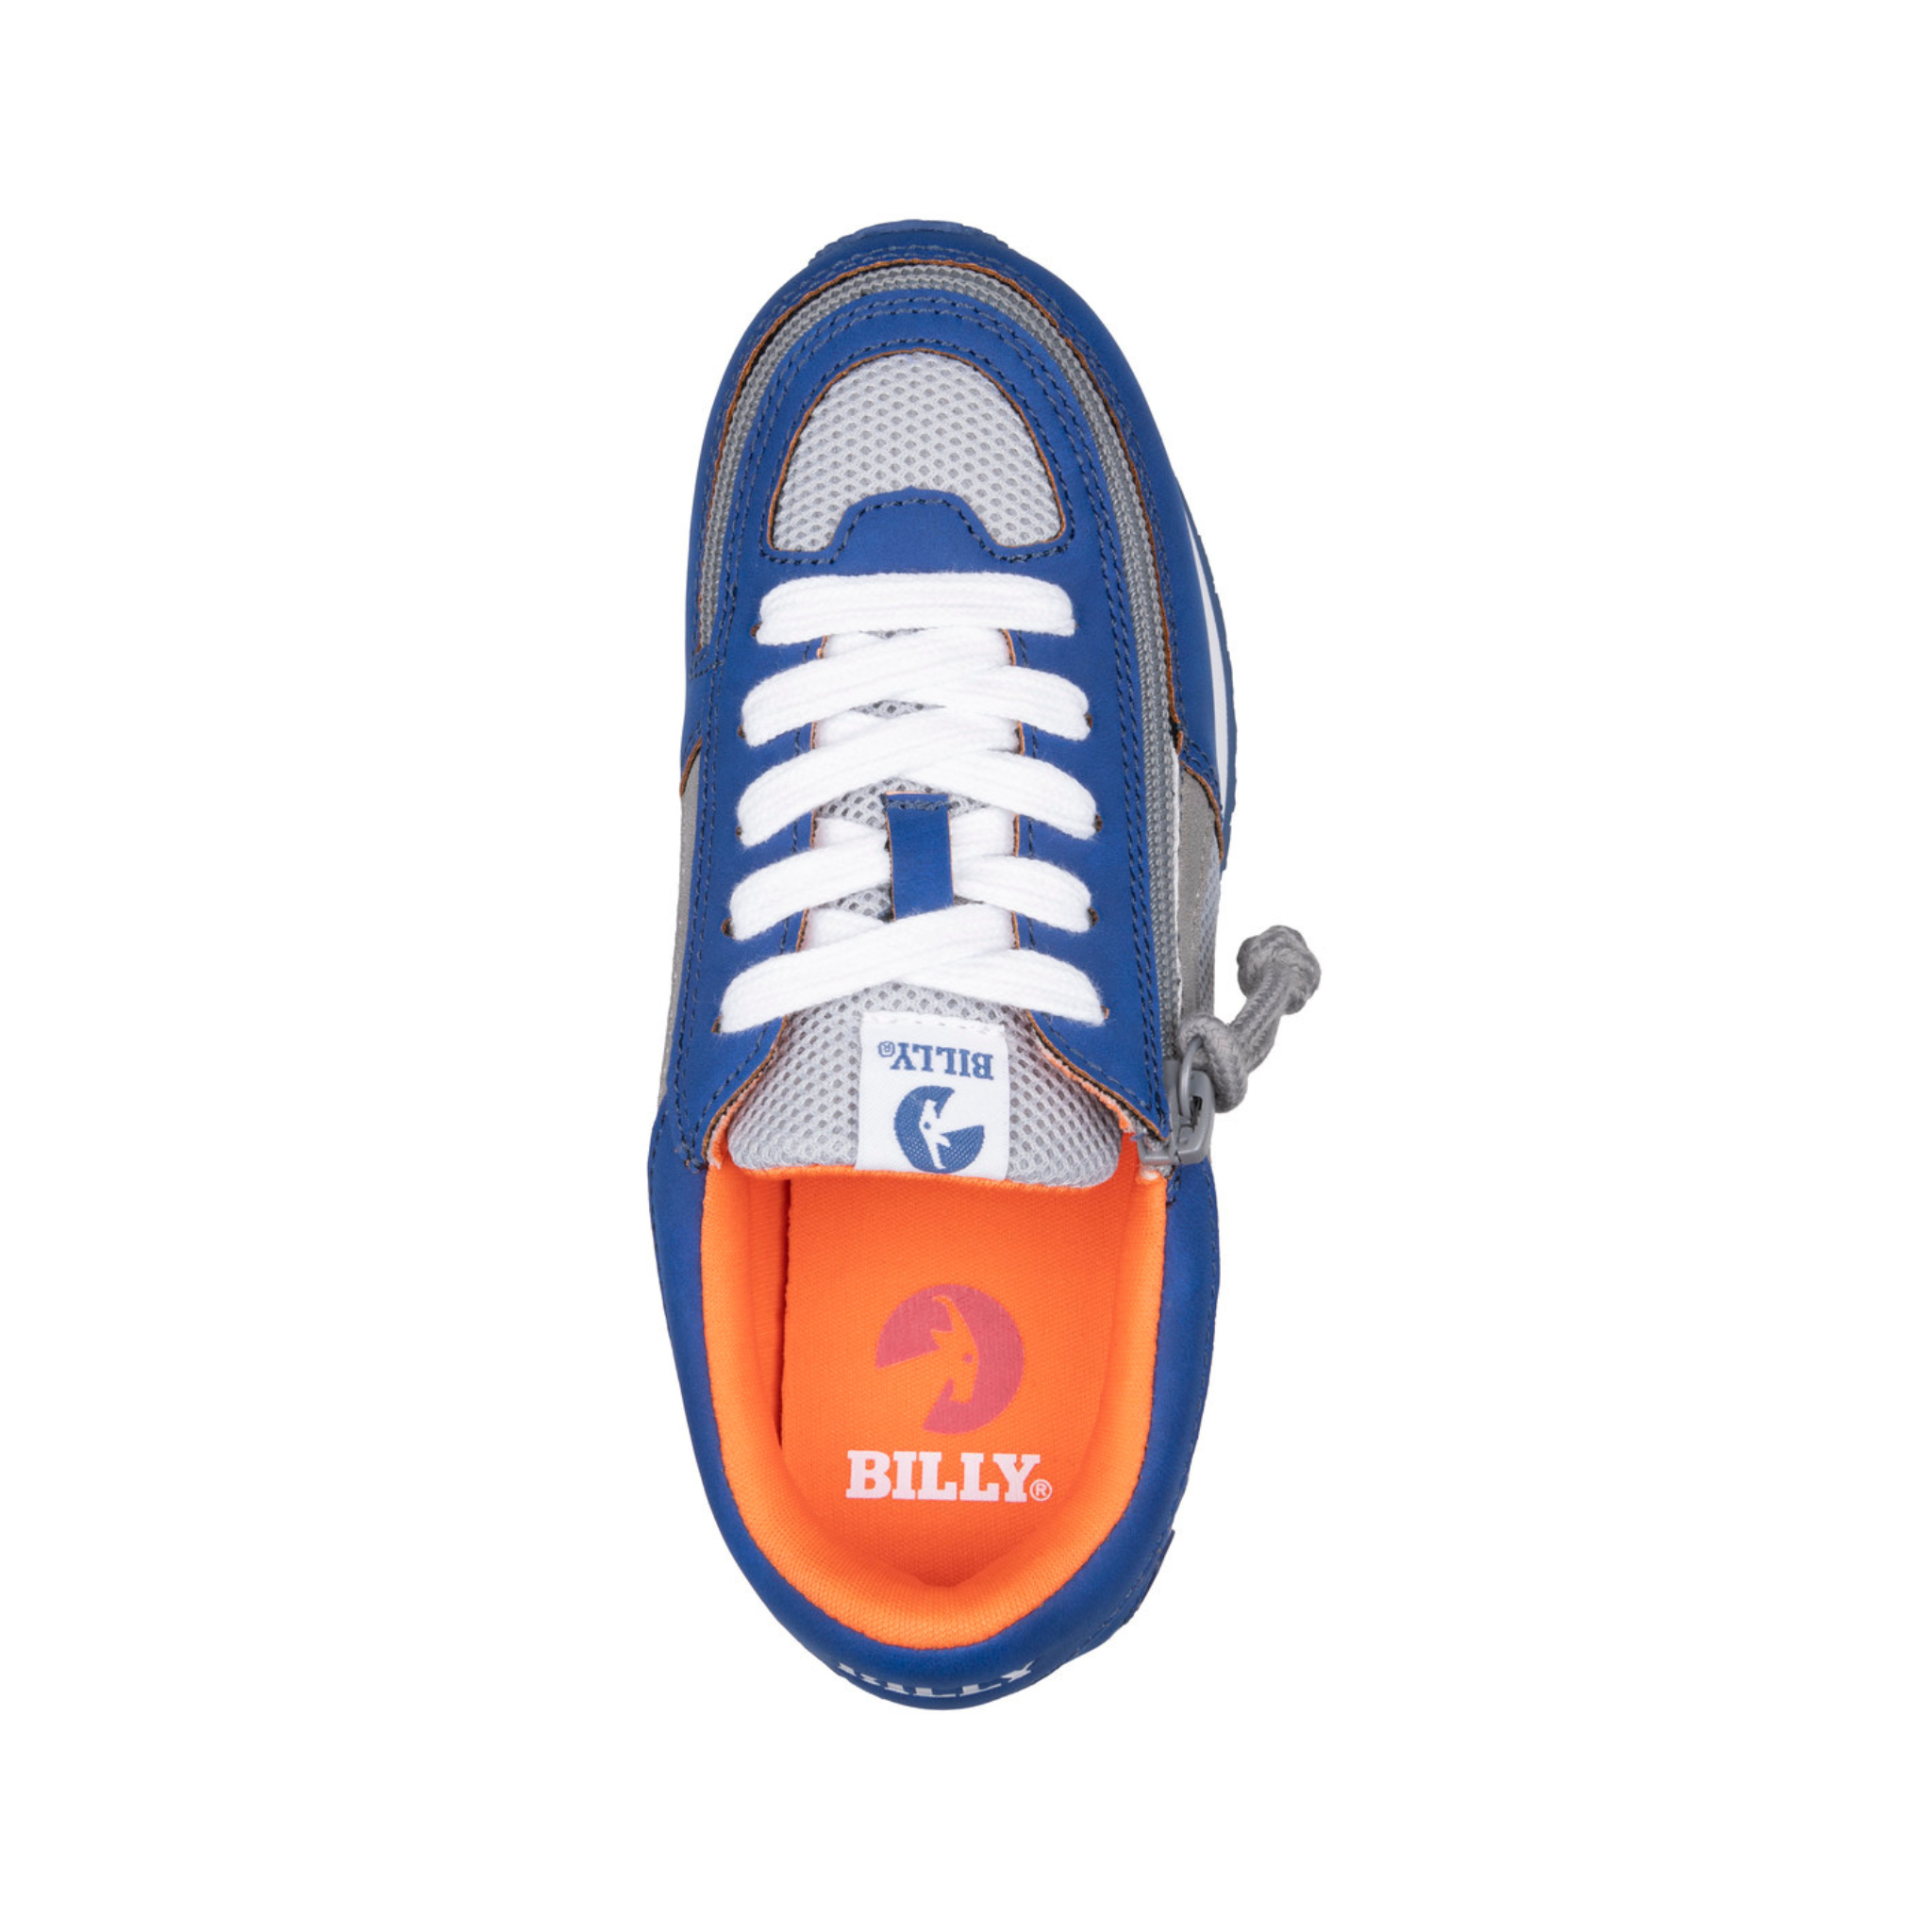 Billy Footwear (Toddlers) - Trainers Faux Suede - Navy / Orange